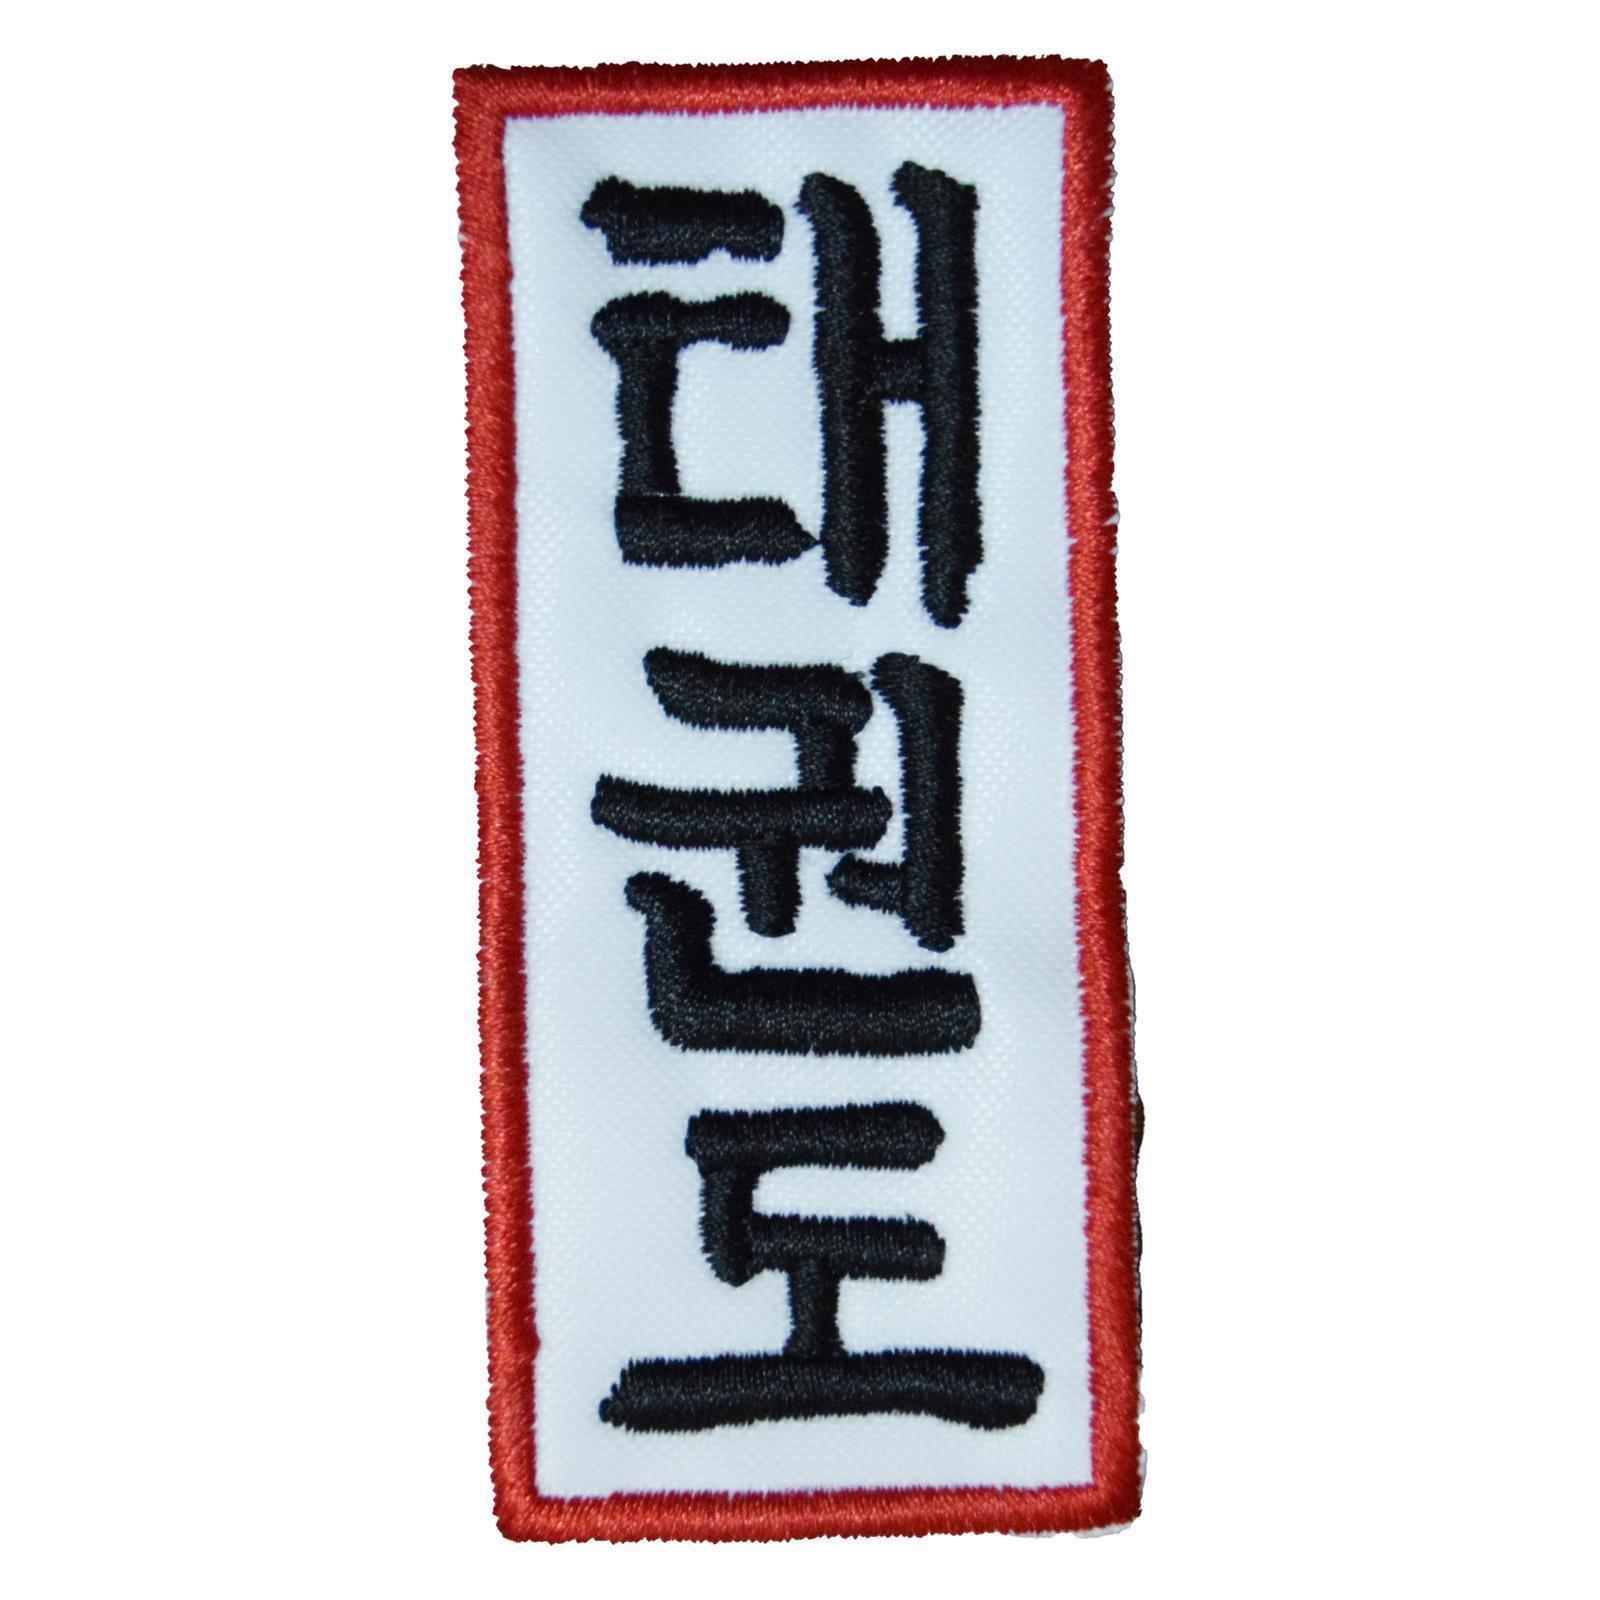 Dae Do Toppa simbolo Taekwondo (3,5 * 8,5 cm - BIANCO)